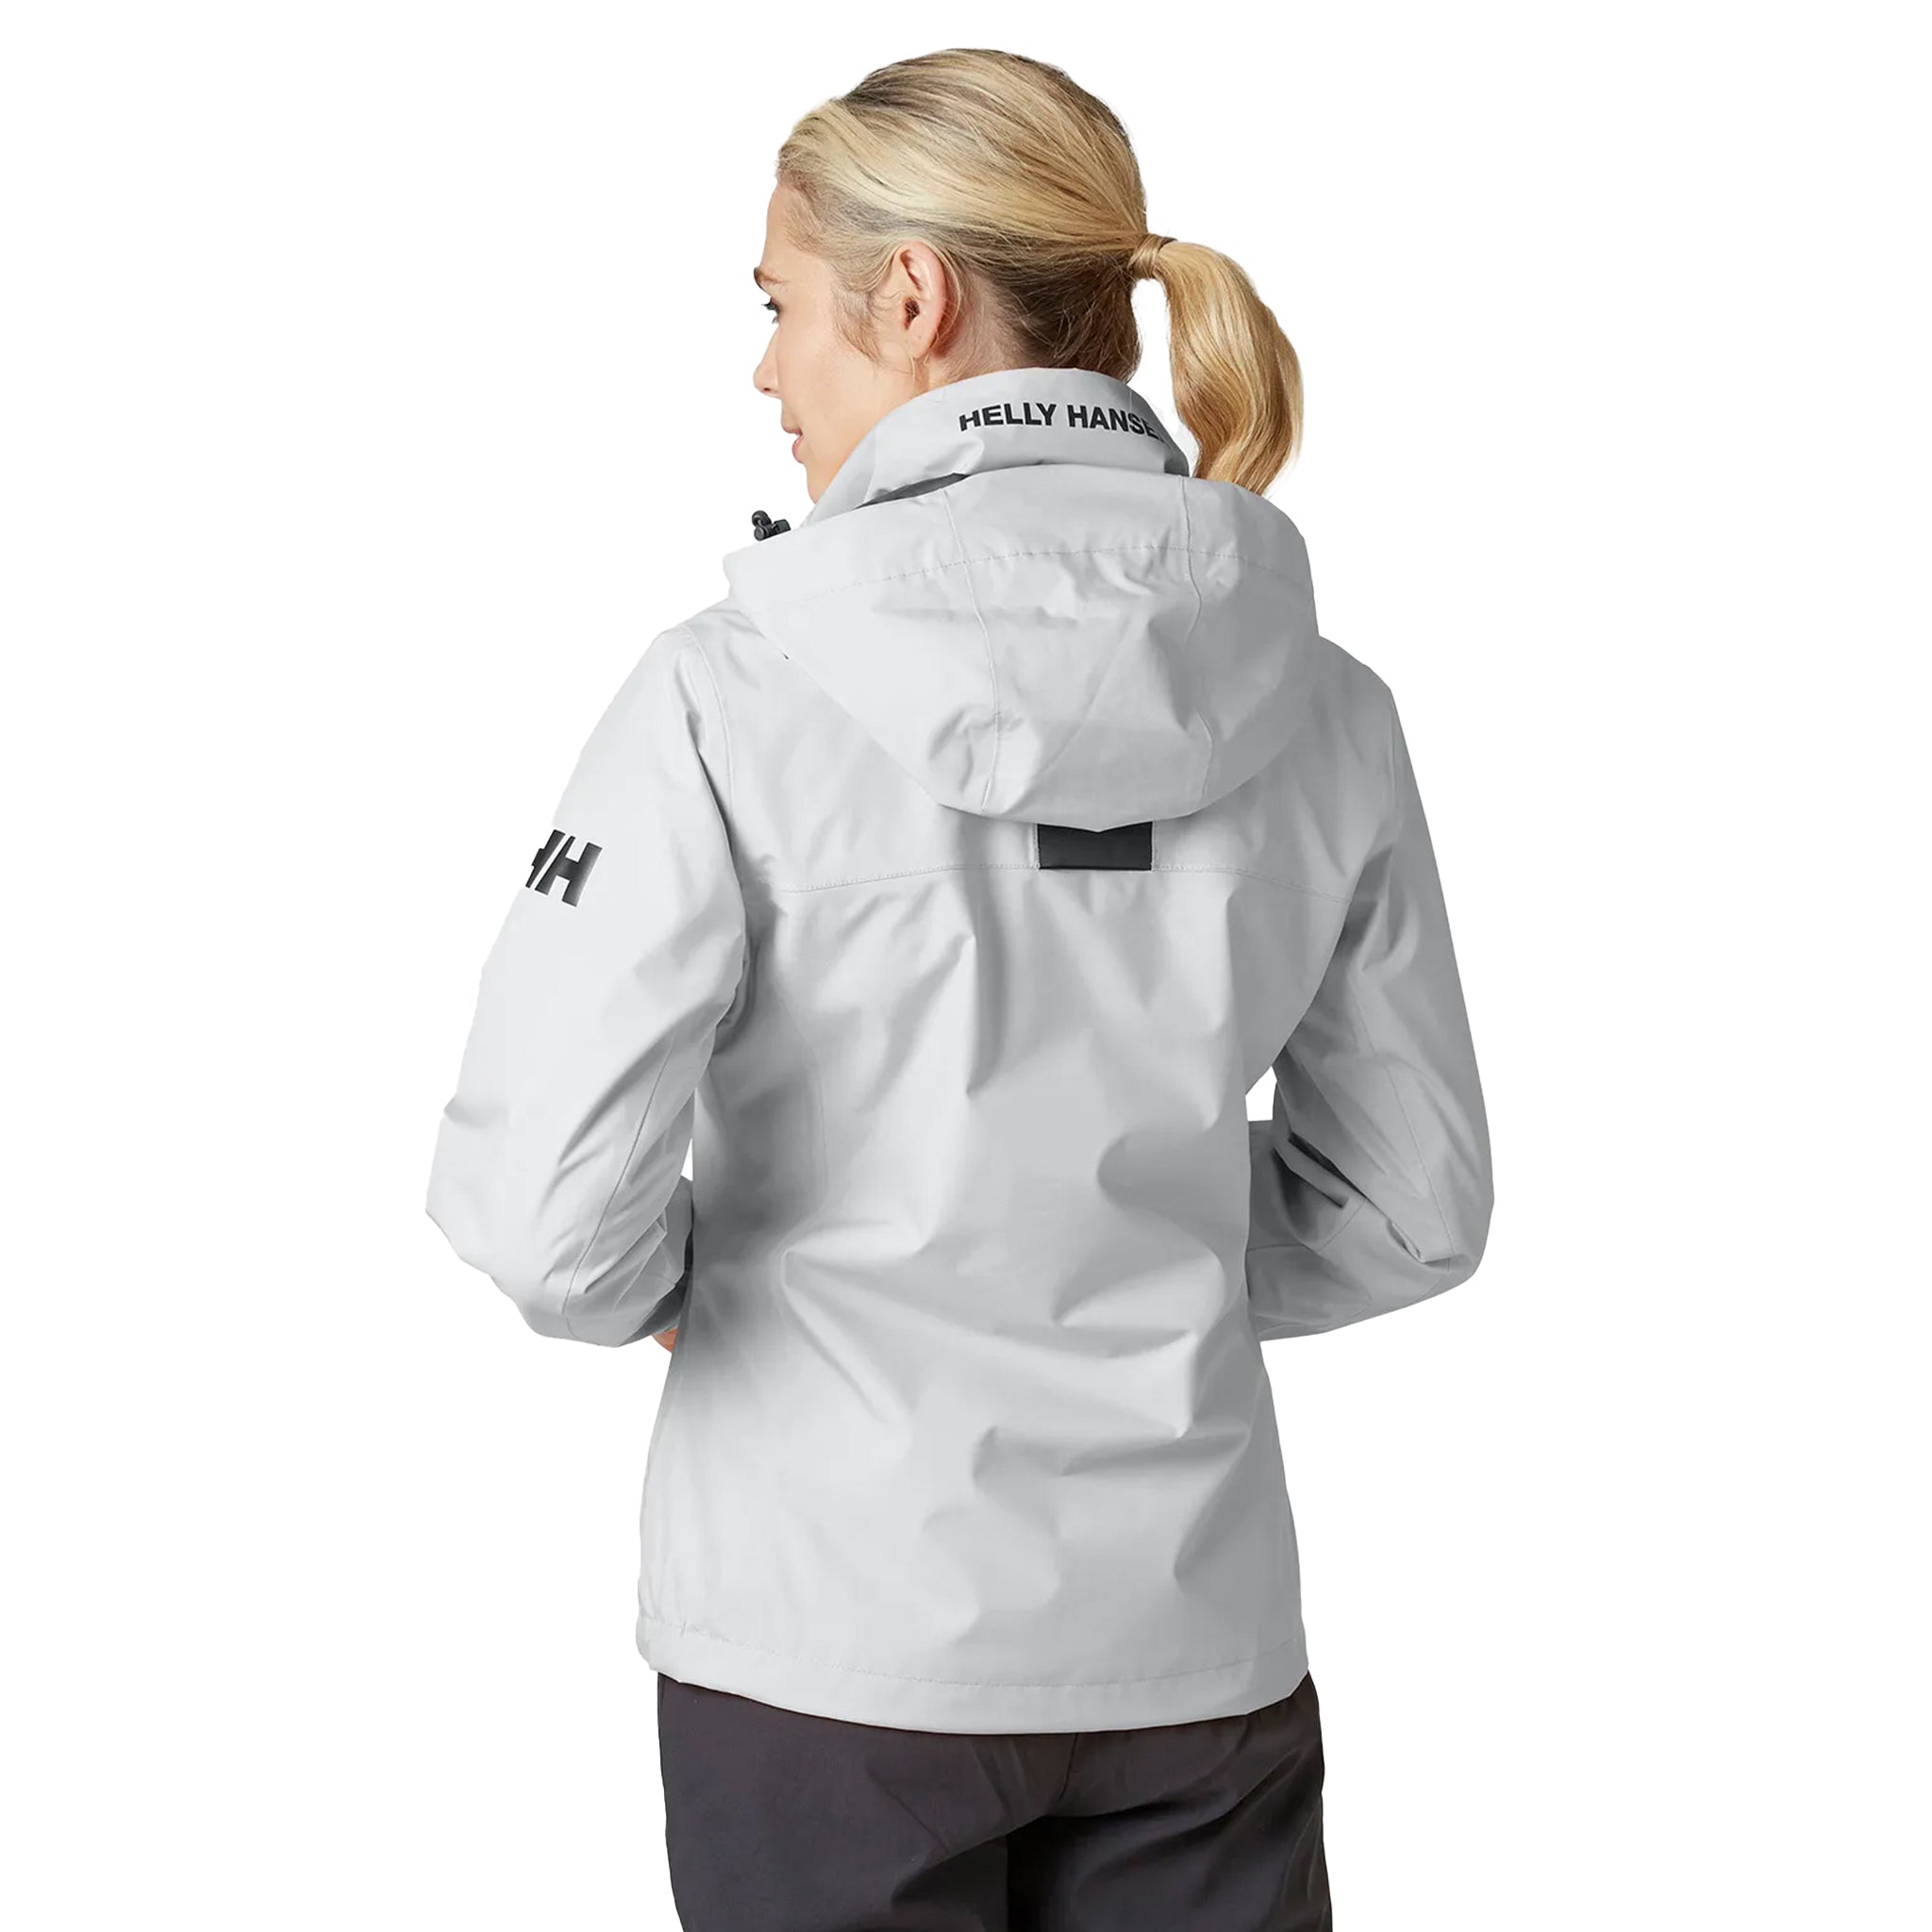 Slot havik pil Helly Hansen RNLI Women's Hooded Midlayer Jacket White Small | RNLI Shop